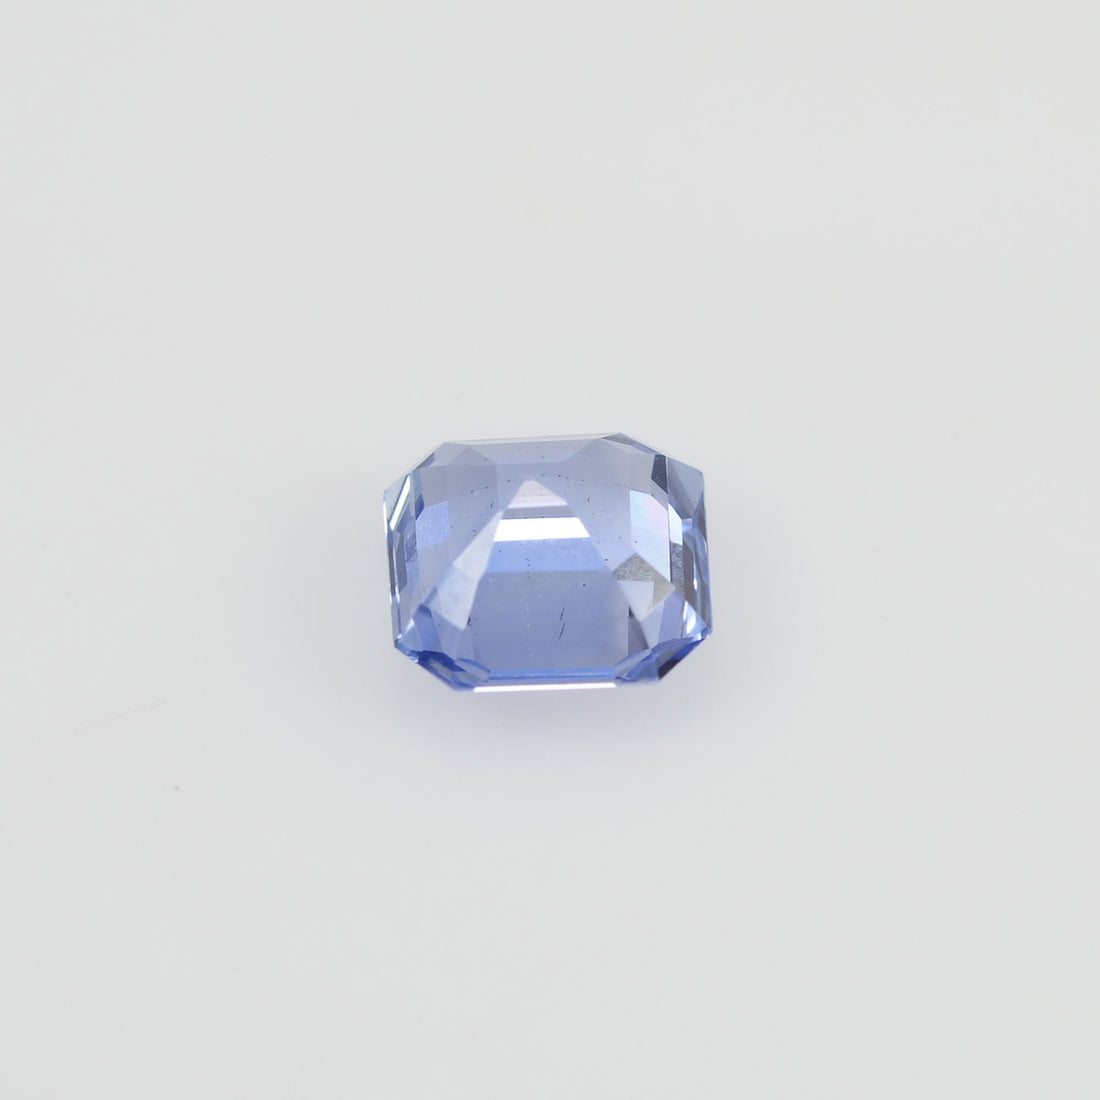 0.94 cts Unheated Natural Blue Sapphire Loose Gemstone Octagon Cut - Thai Gems Export Ltd.